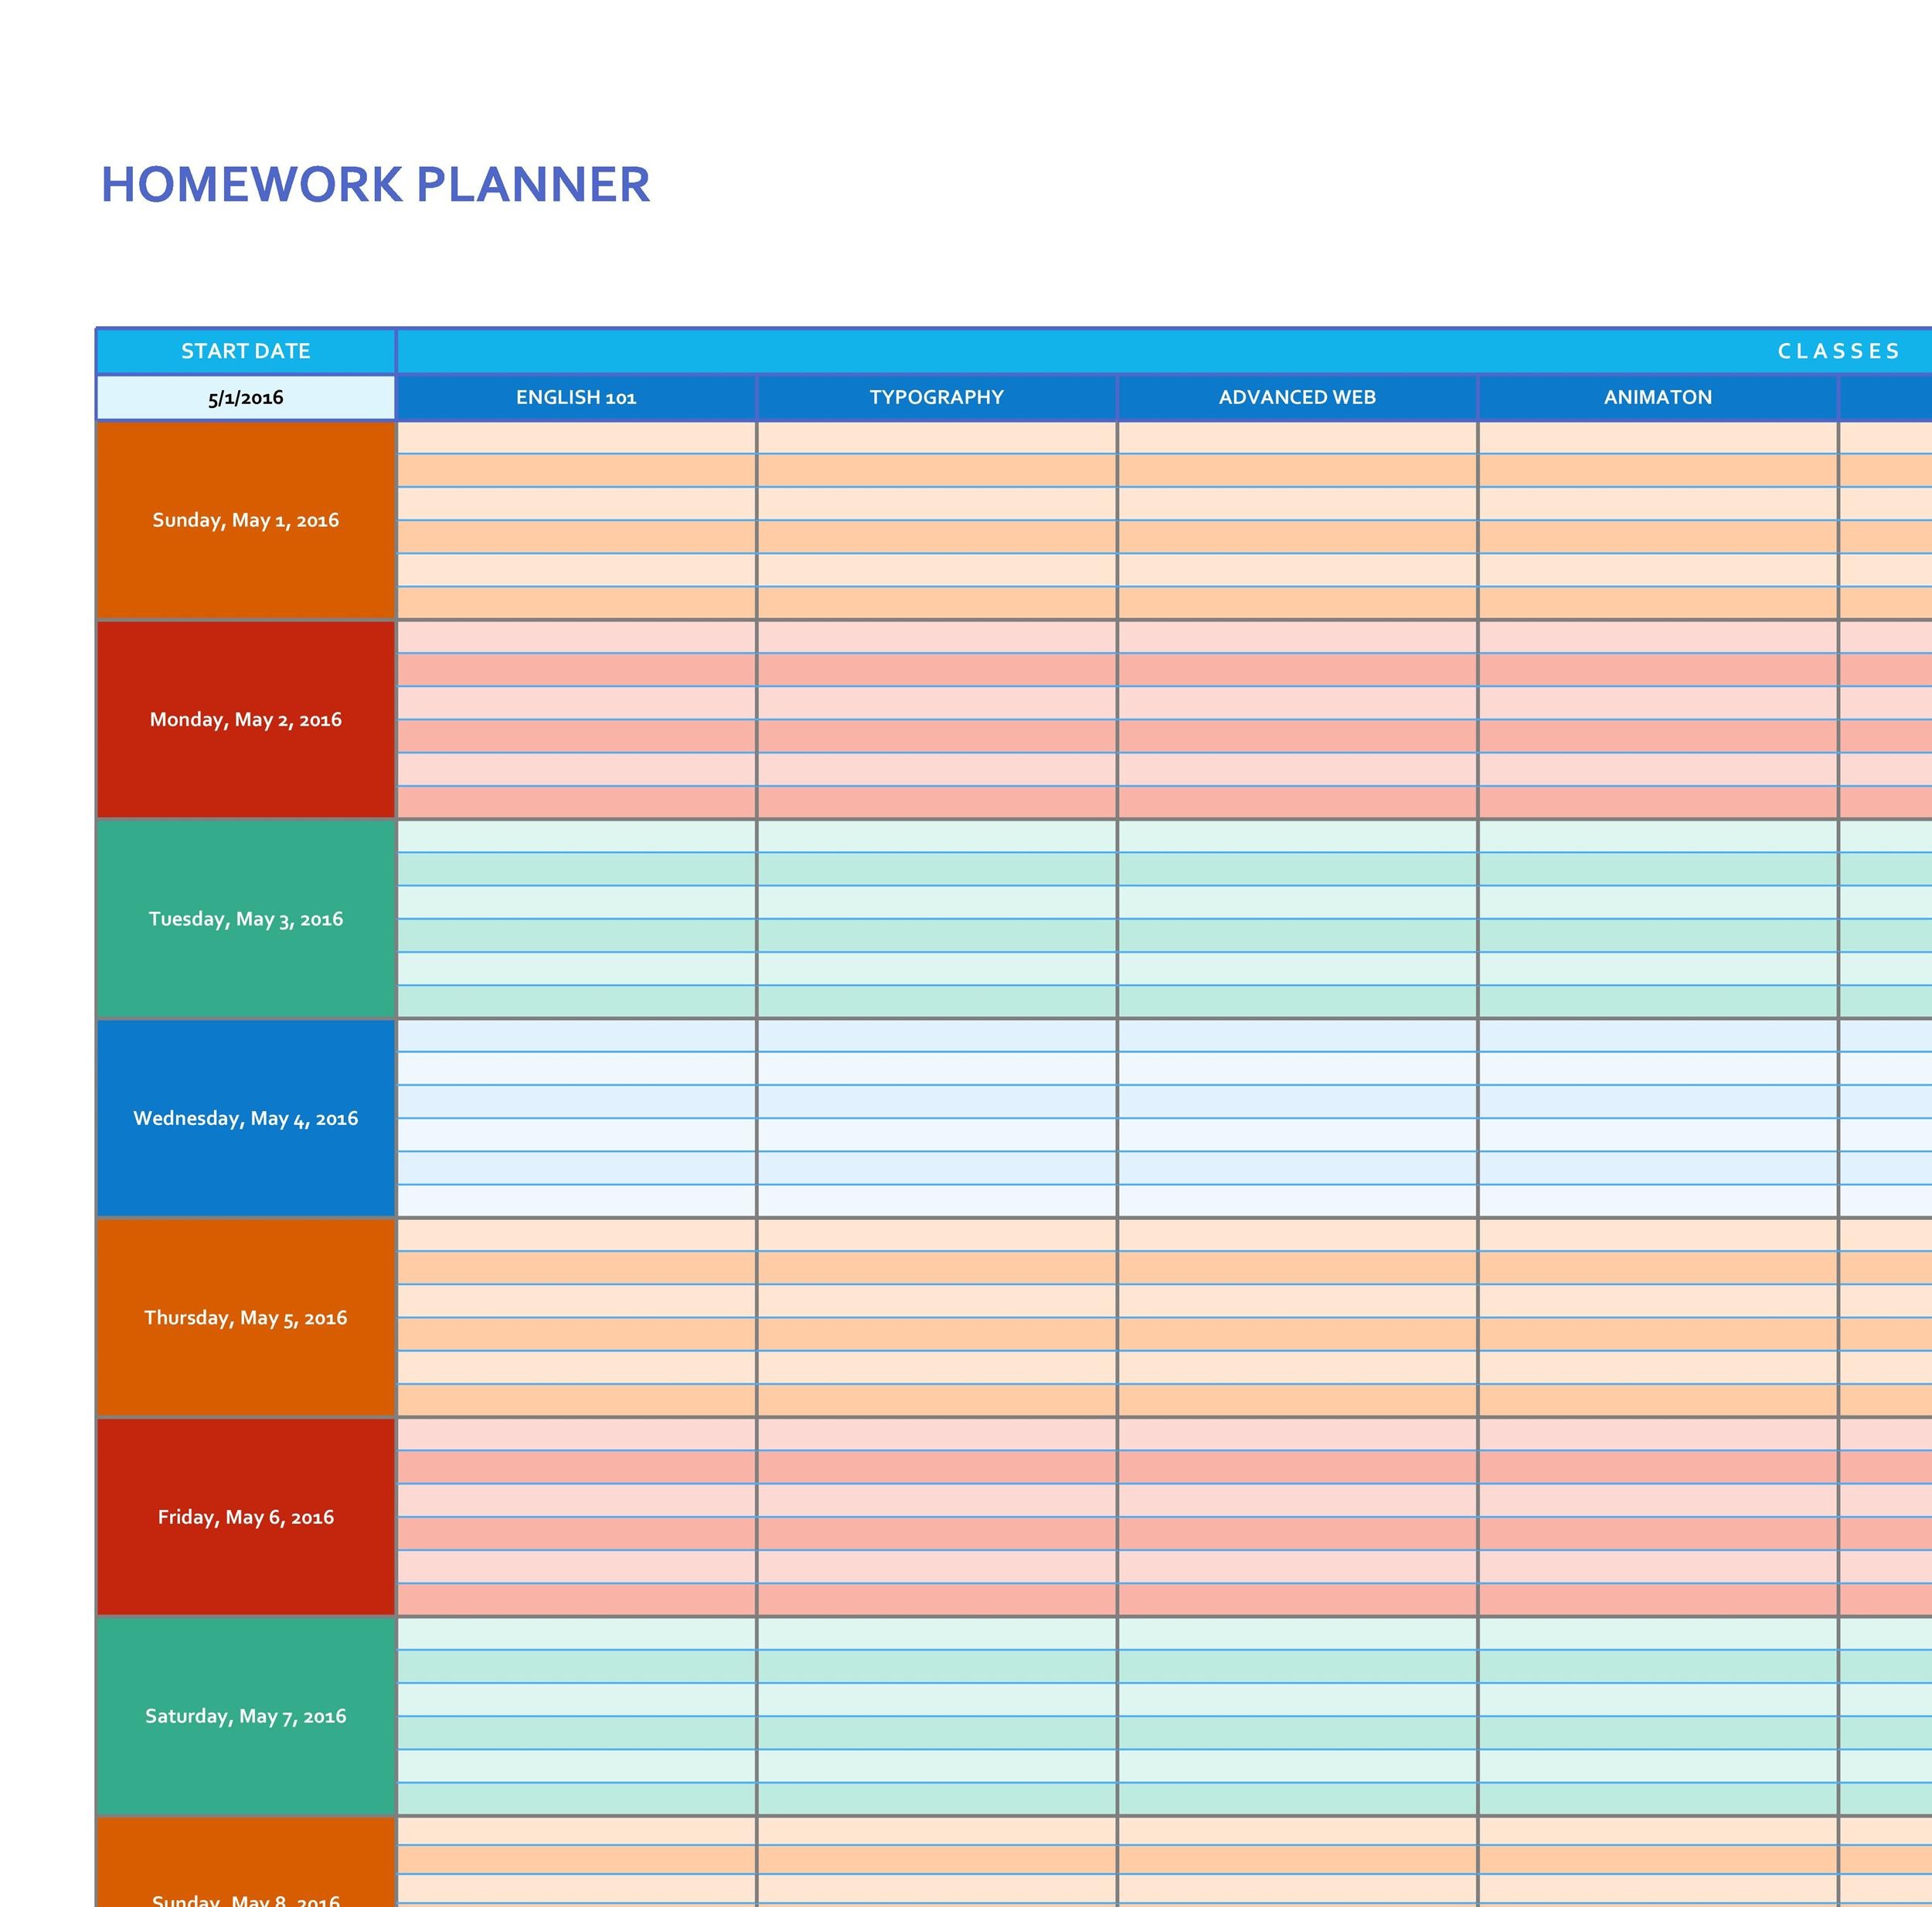 Online homework planner